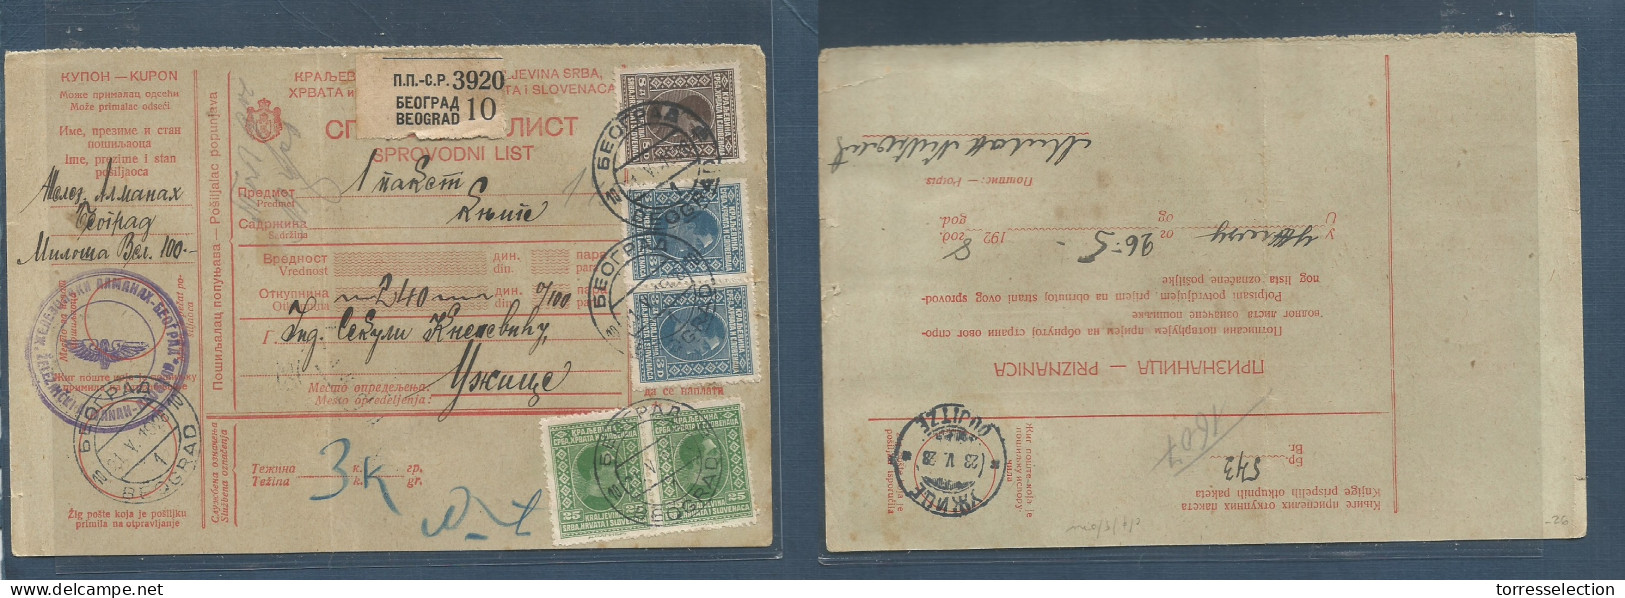 SERBIA. 1928 (21 May) Belgrade - Oujitze (23 May) Registered Multifkd Package Card. Fine. - Serbie